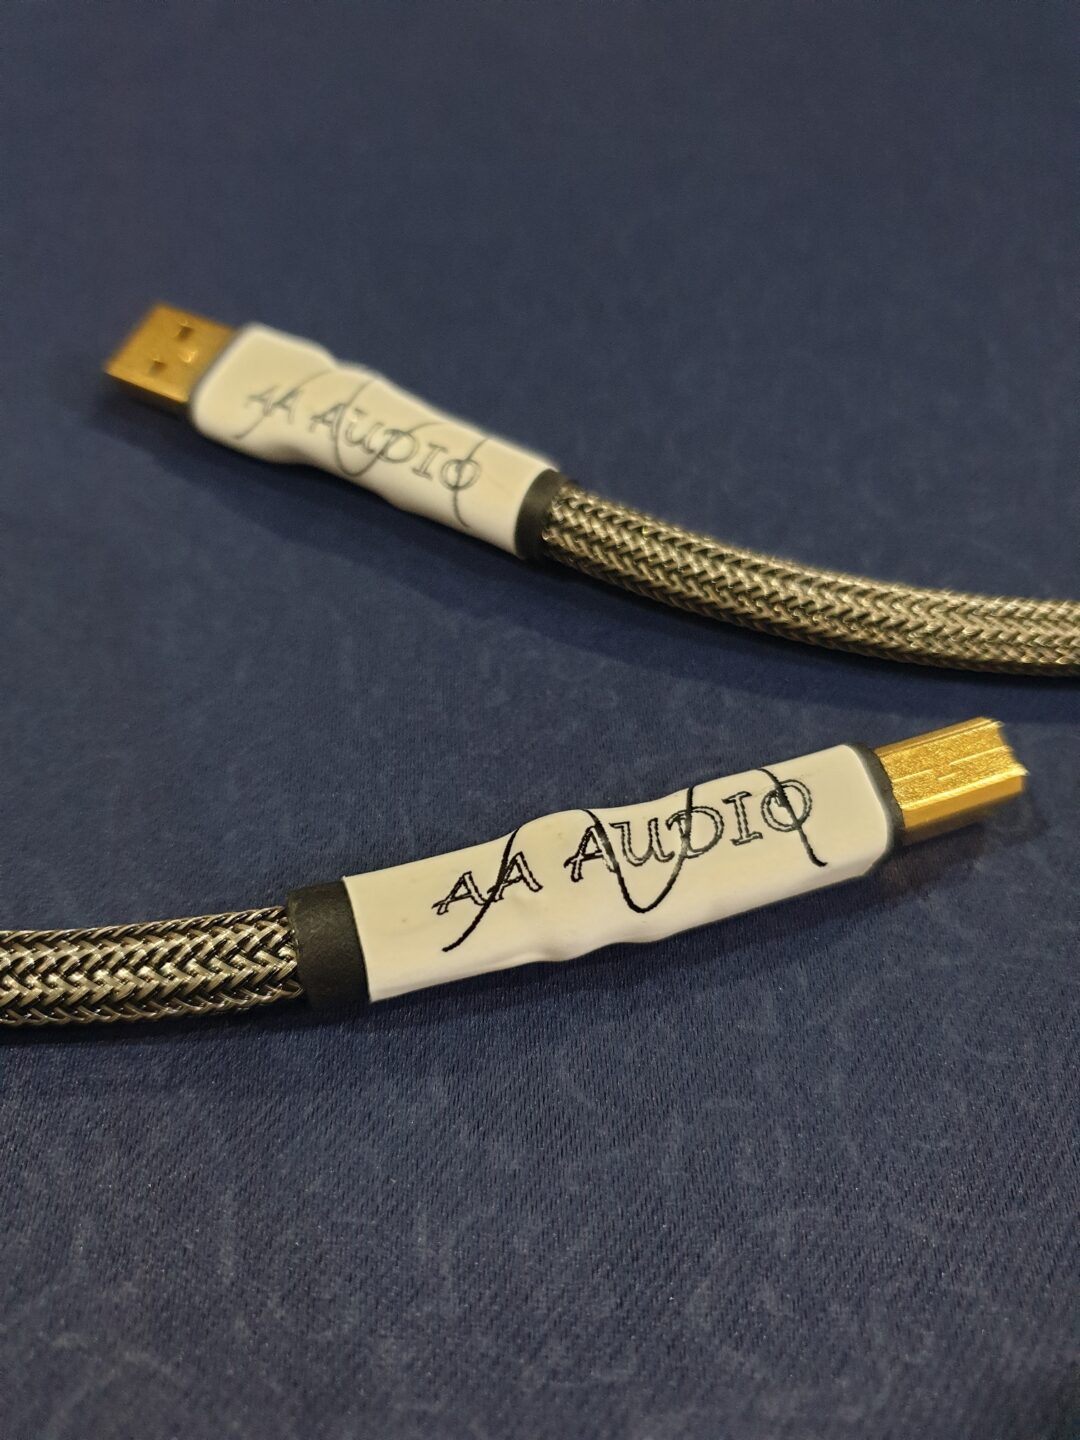 AA Audio USB / AA Audio Reference USB - High-Performance USB2 Audio Cable (USB A to USB B)